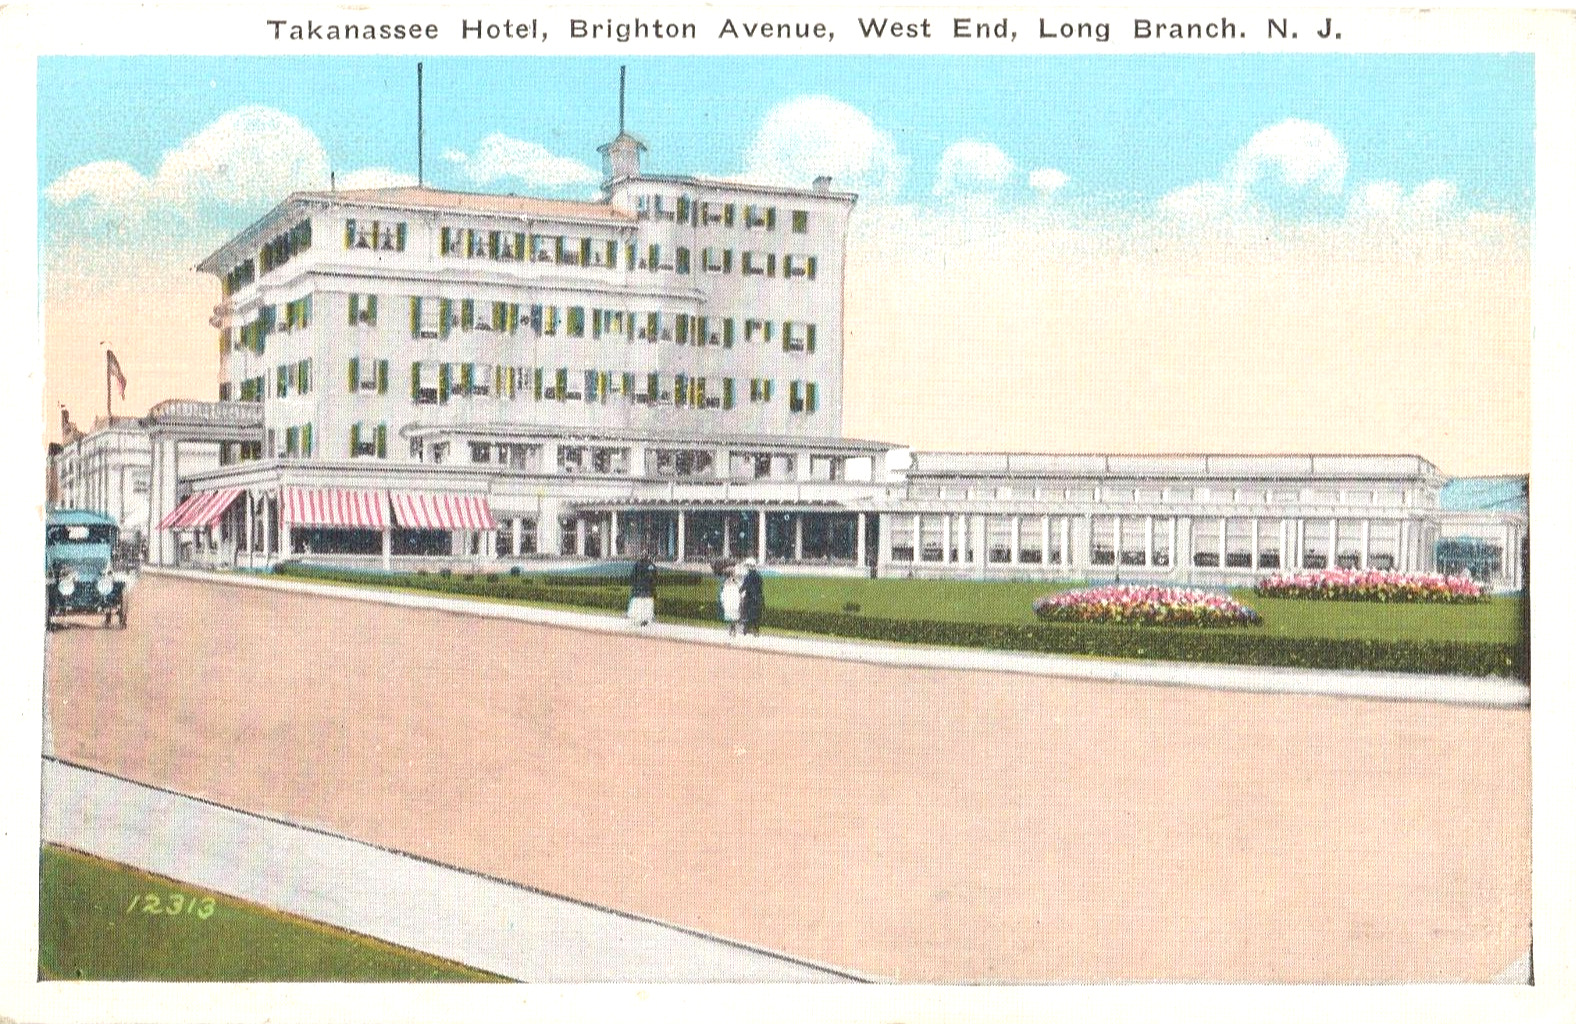 TAKANASSEE HOTEL WEST END BRIGHTON AVE NJ LONG BRANCH NJ